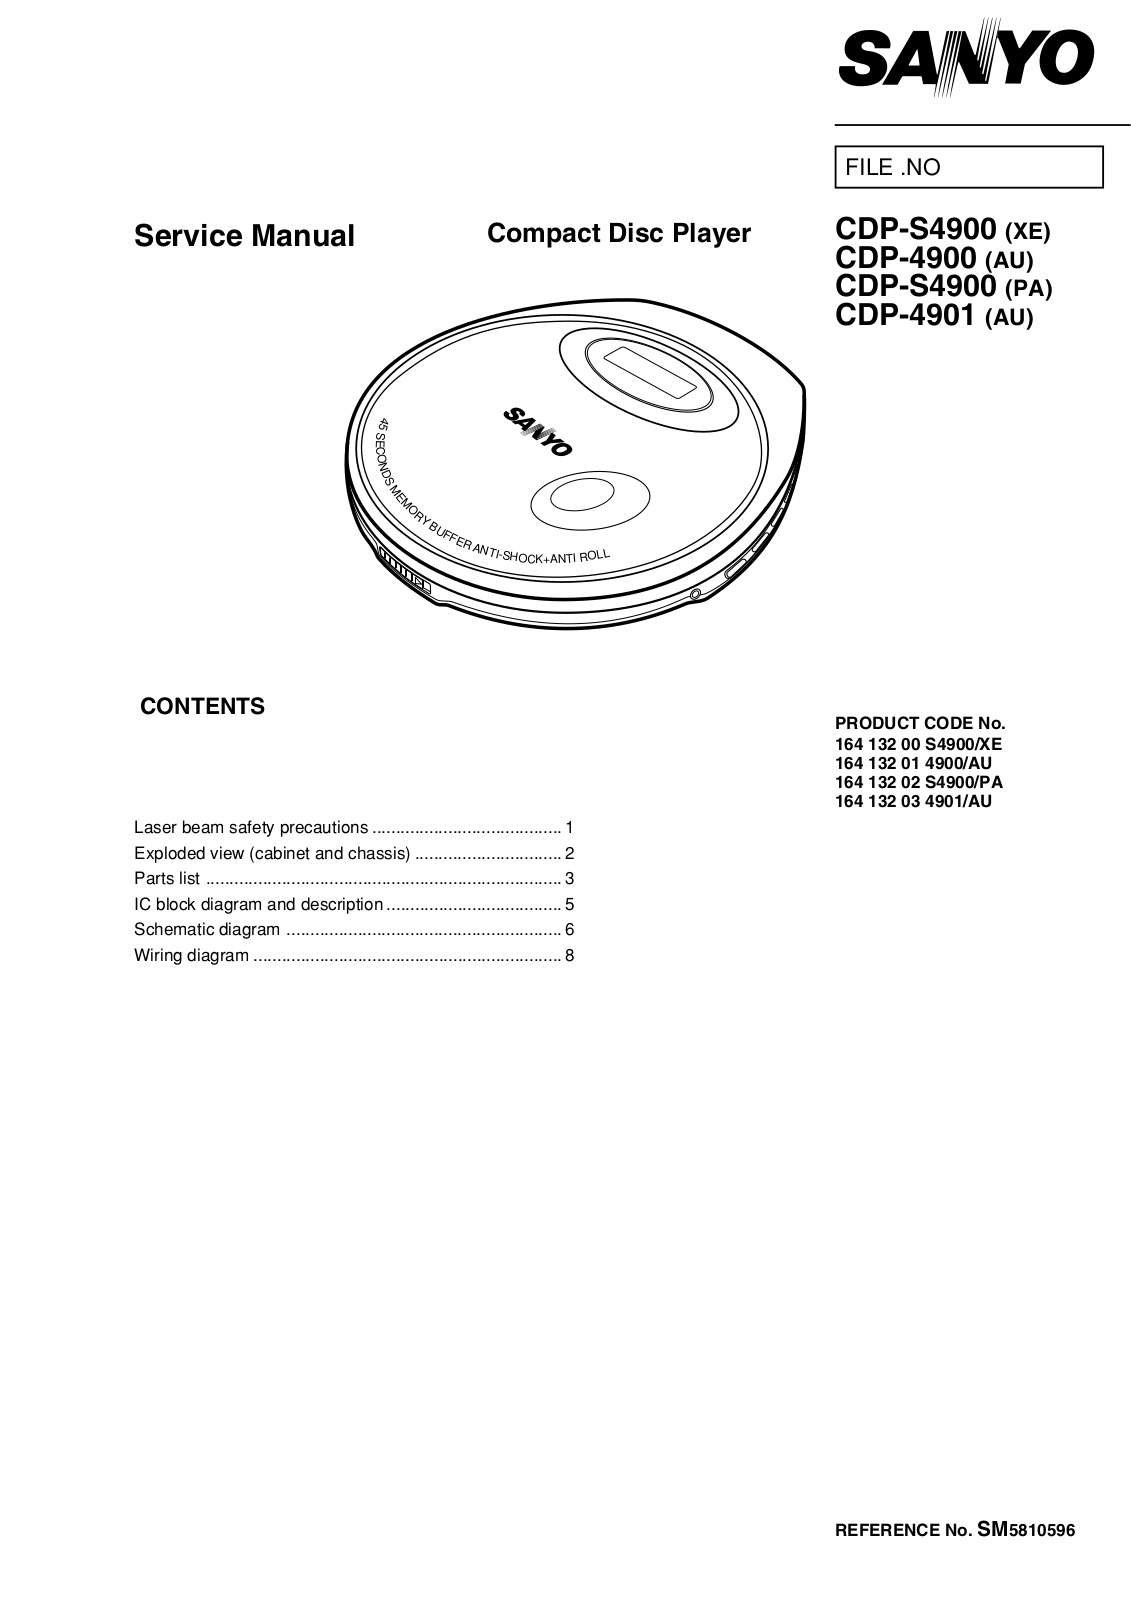 Sanyo CDP-4900, CDP-4901, CDPS-4900 Service manual